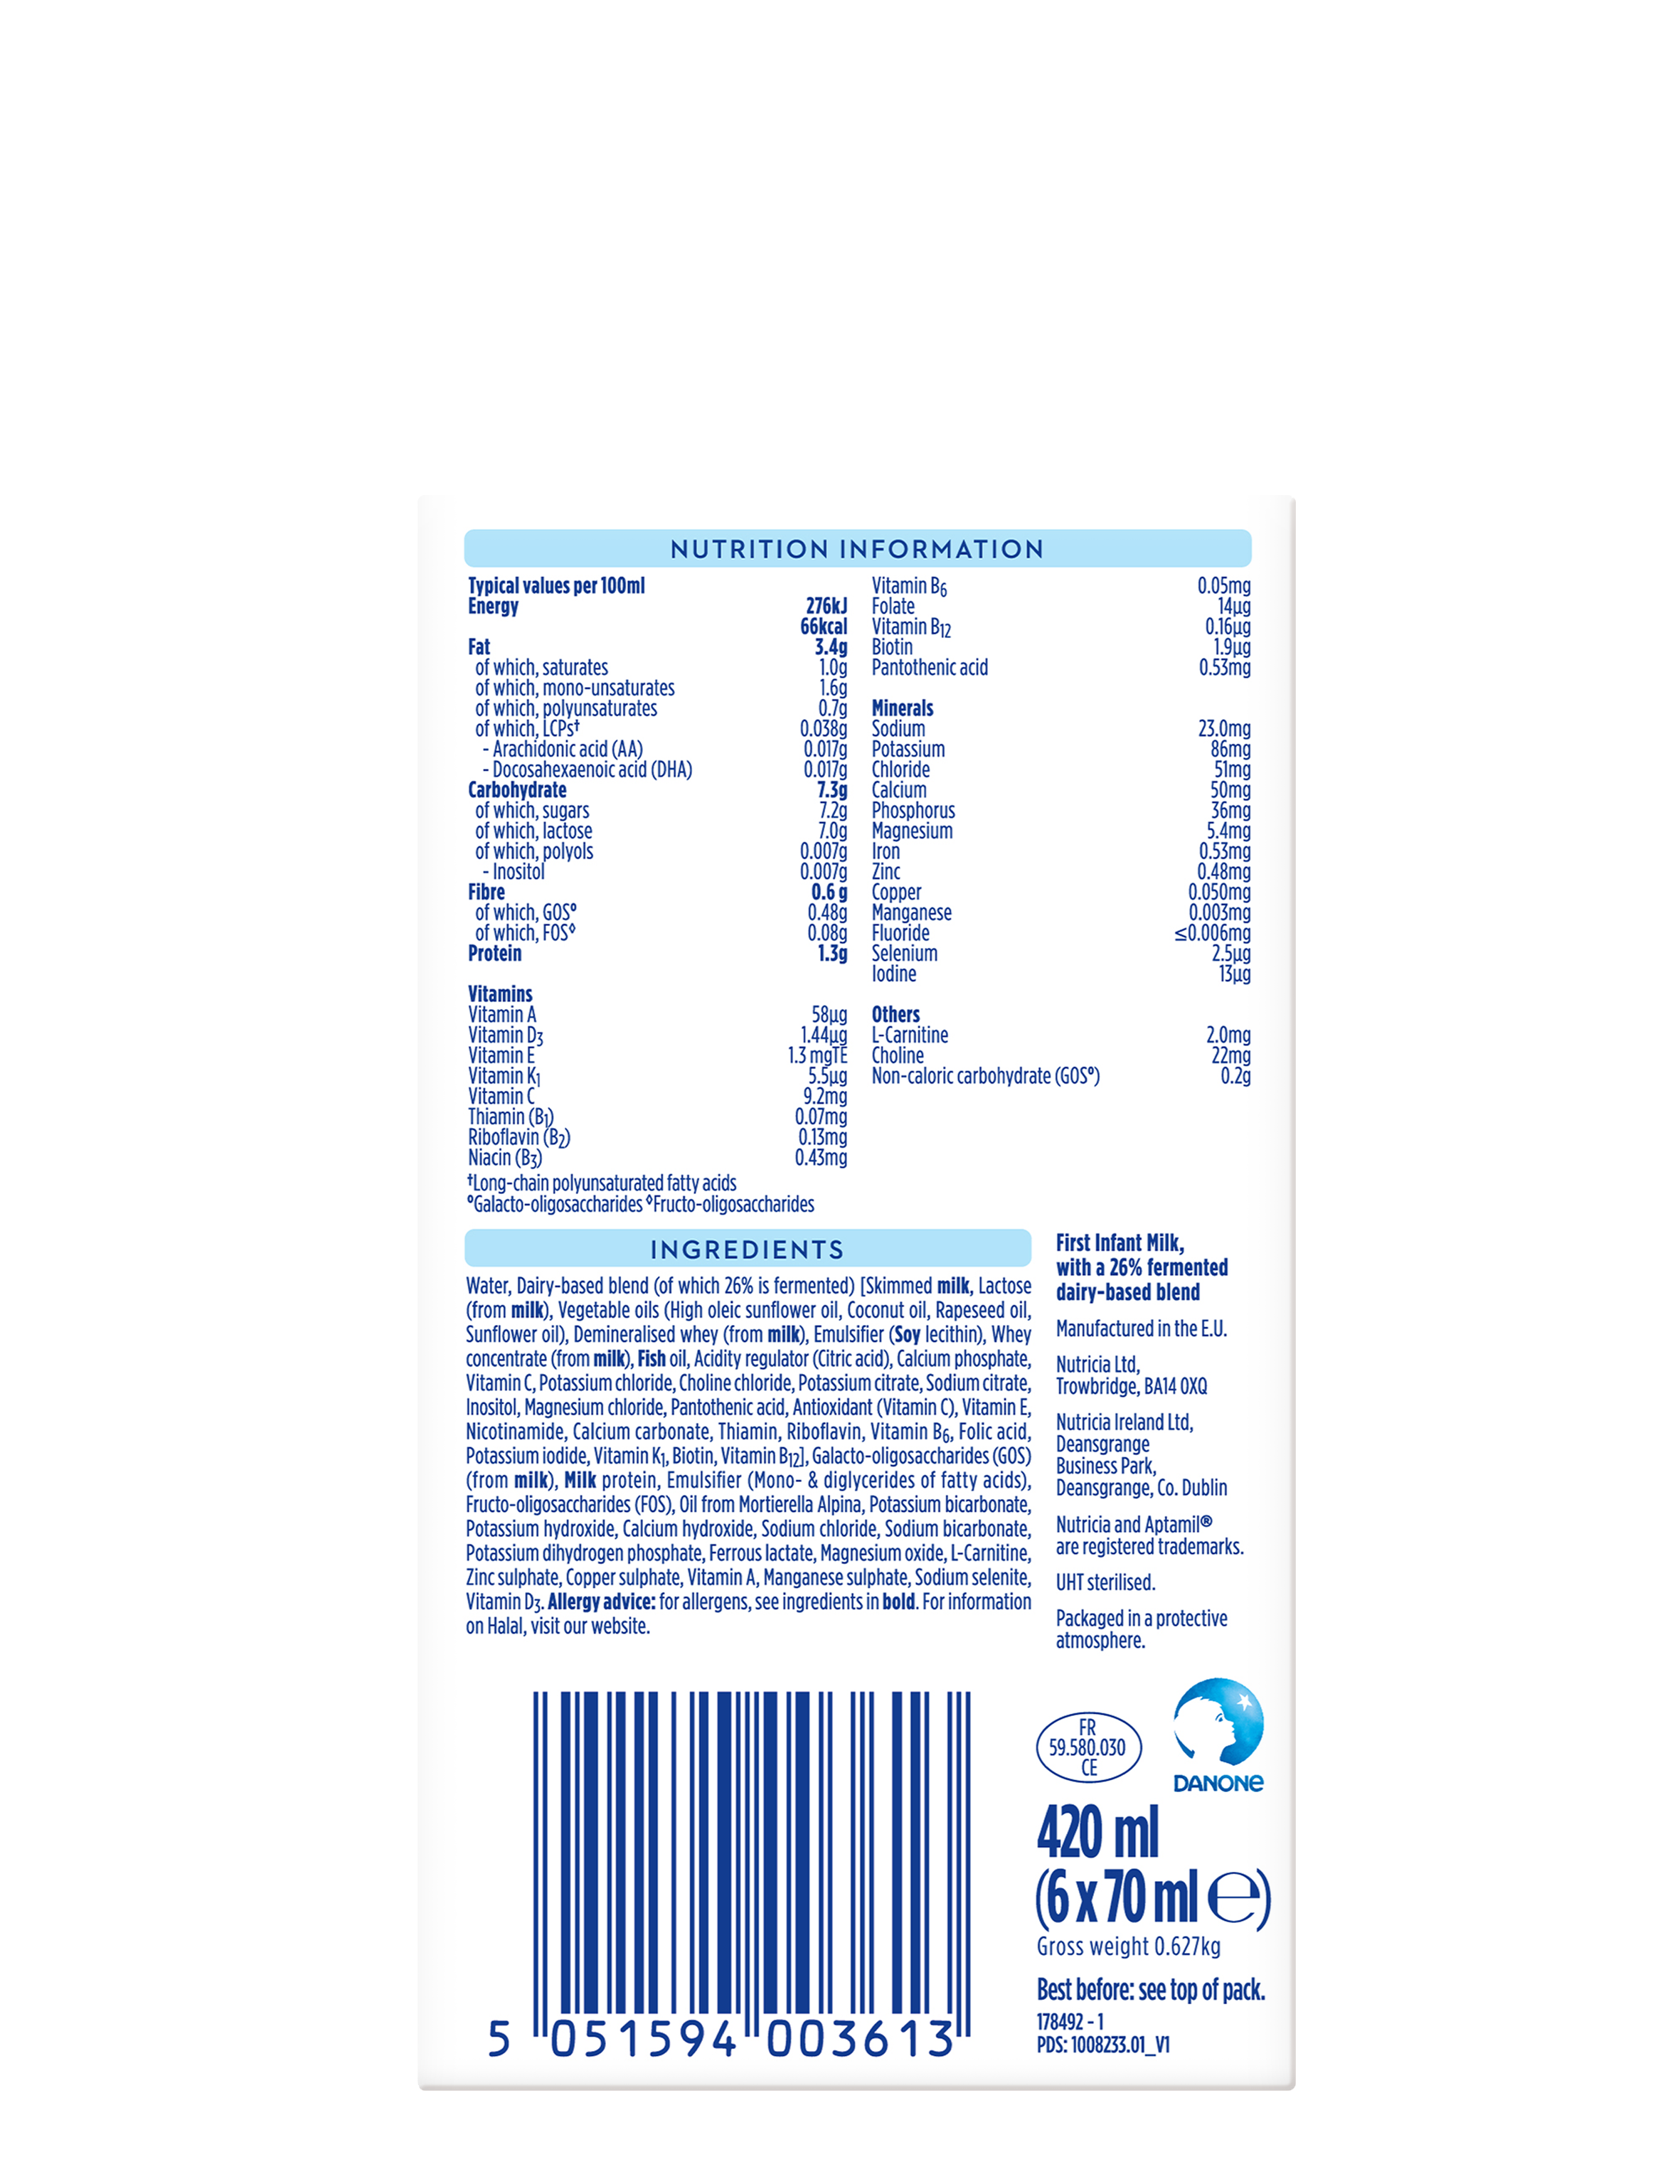 Aptamil® First Infant Milk Starter Pack 6x70ml